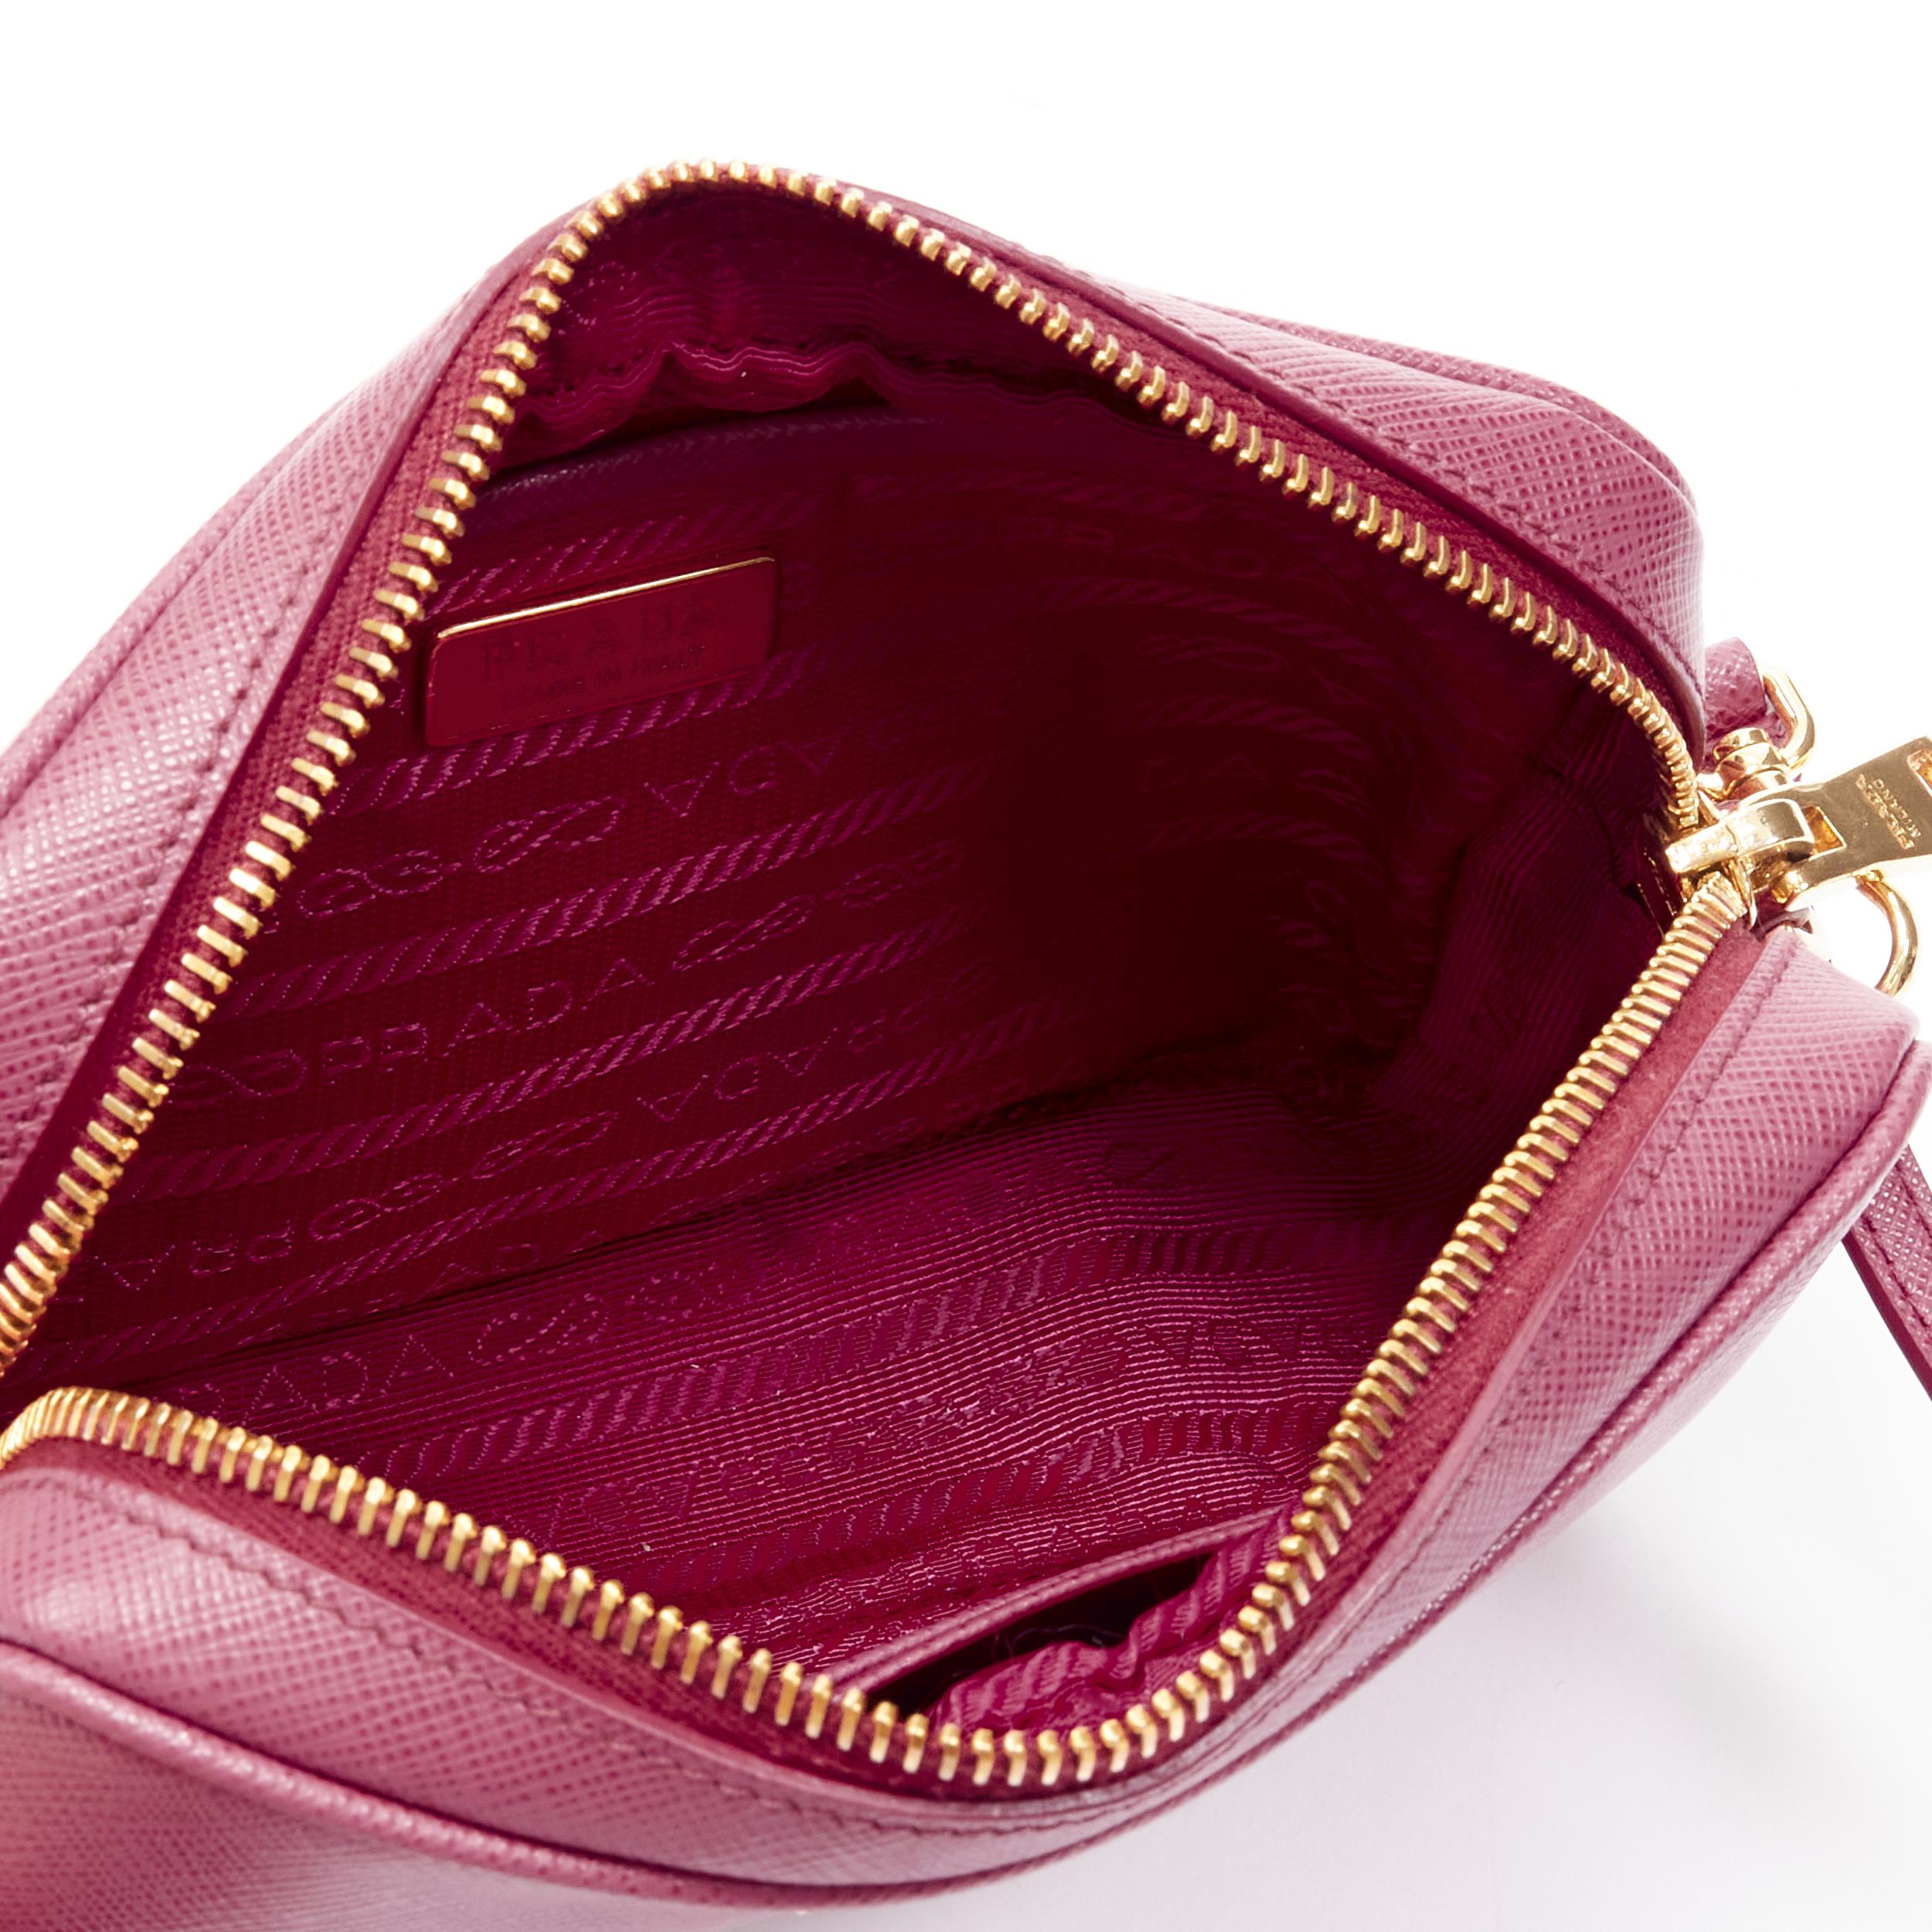 PRADA Bandoliera Bruyere pink saffiano leather gold logo crossbody camera bag 1